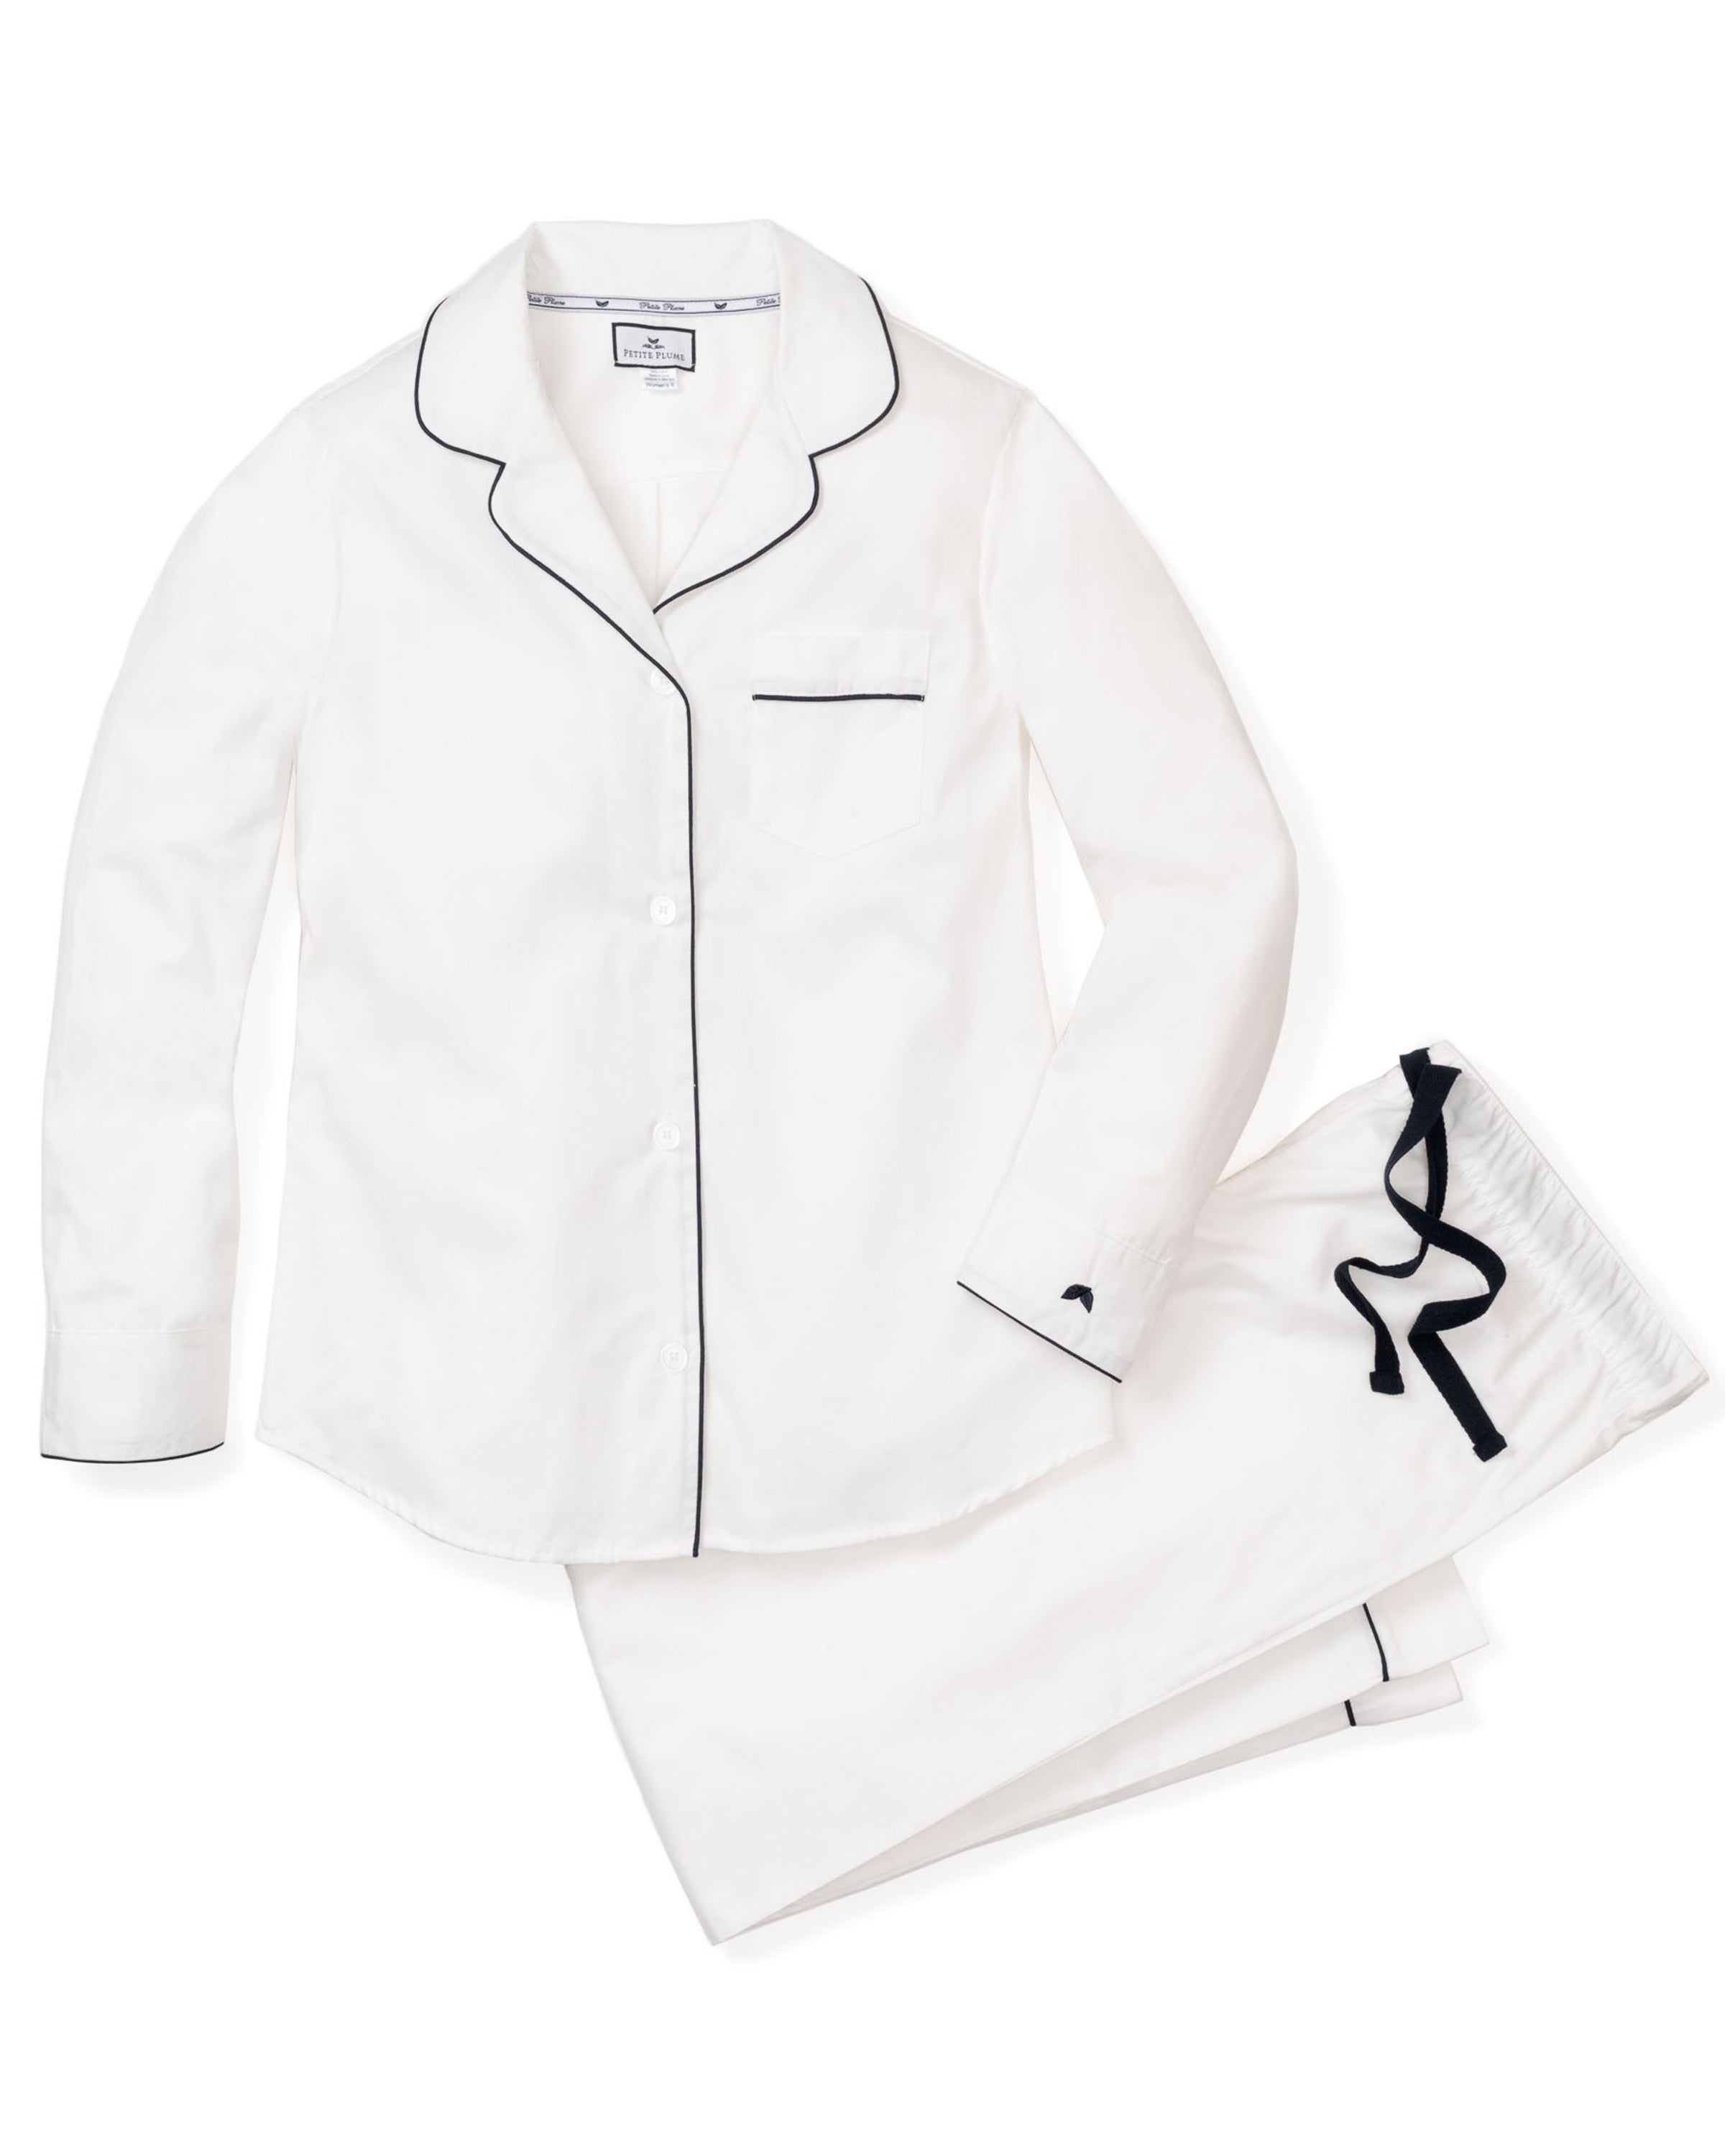 Women's White Cotton Pajama Set (Navy Piping)